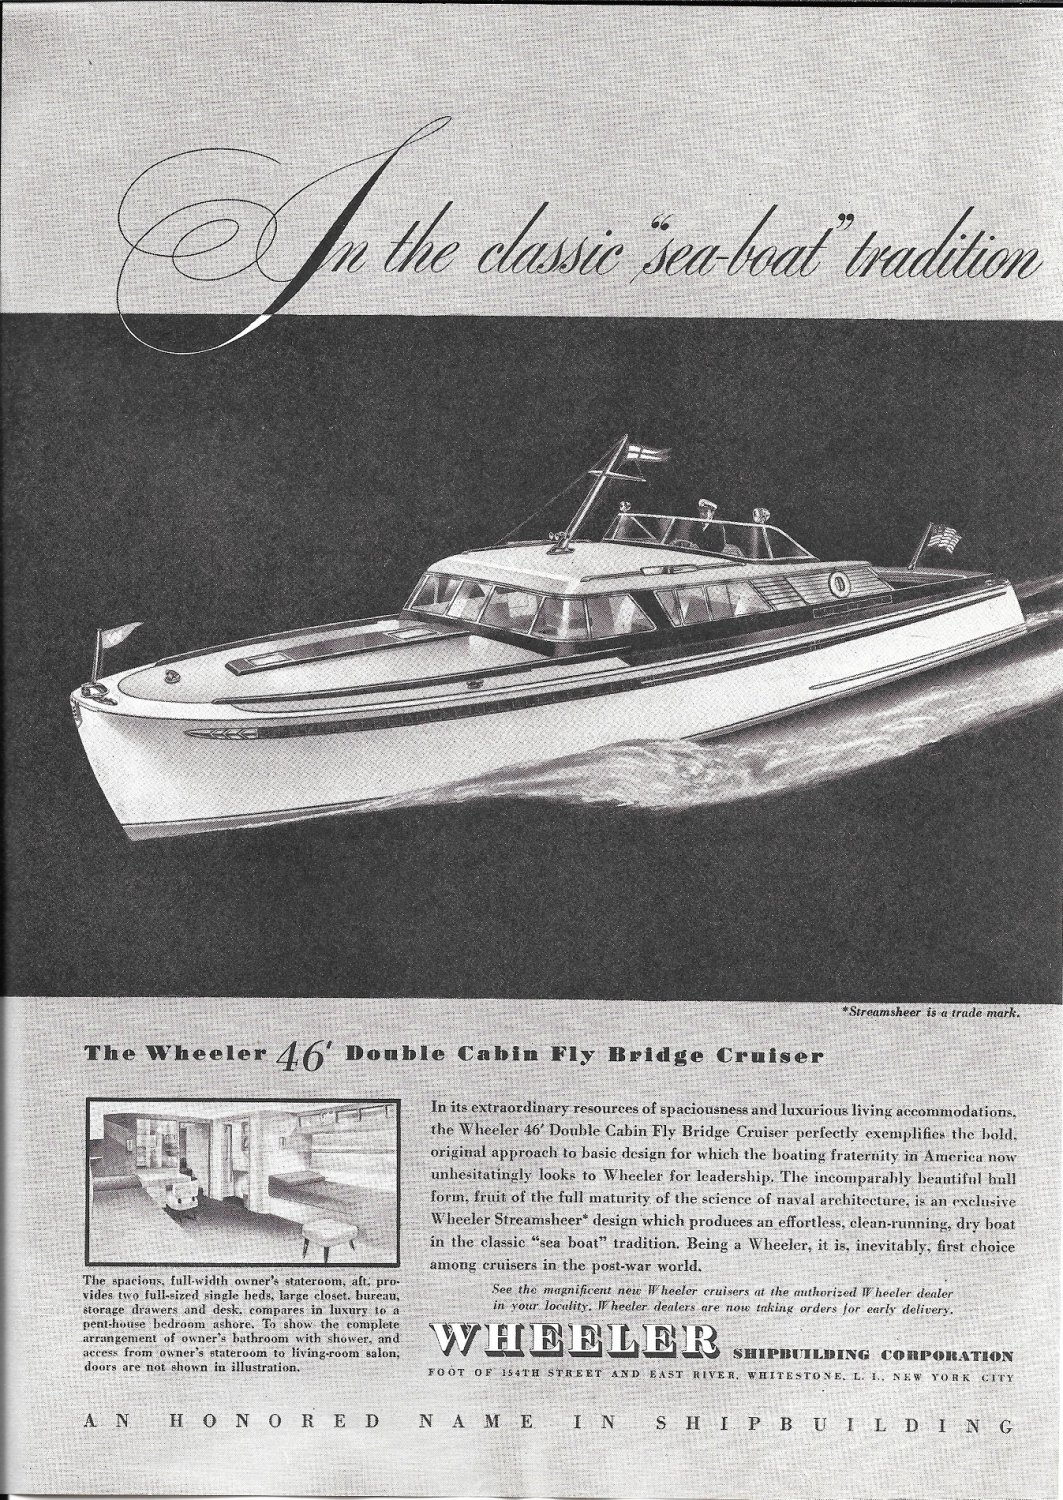 1946 Wheeler Shipbuilding Corp 46' Double Cabin Fly Bridge Cruiser Ad- Nice Drawing